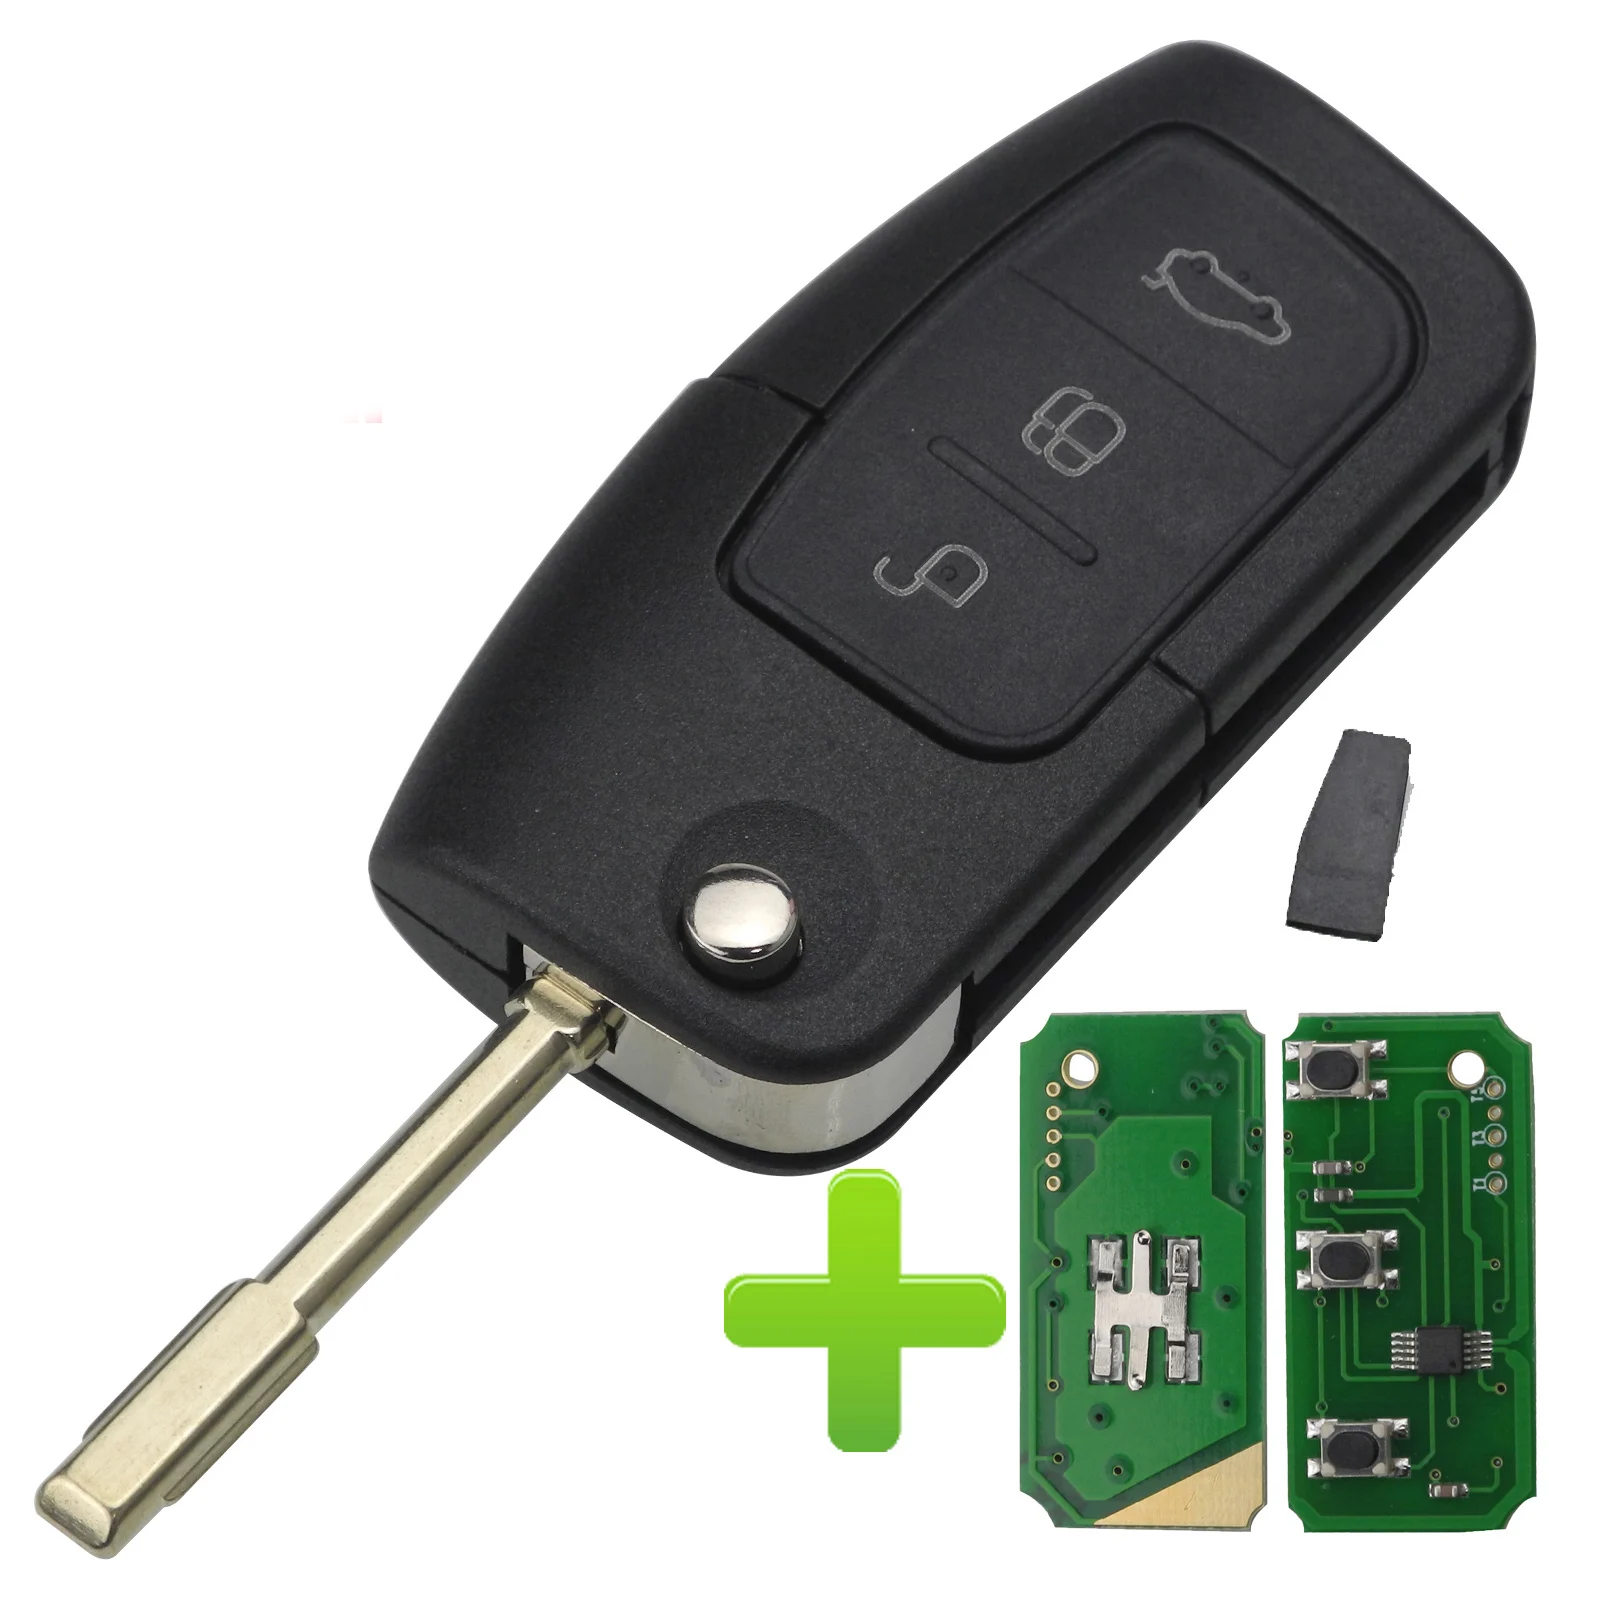 Jingyuqin флип дистанционный ключ для автомобиля с FO21 4D63/60 ID63/60 40/80bit чип 433 МГц для Ford Focus Fiesta C Max Ka Mondeo Galaxy S 3 BTN с бесплатной доставкой - Цвет: 433mhz 4D63 80bit